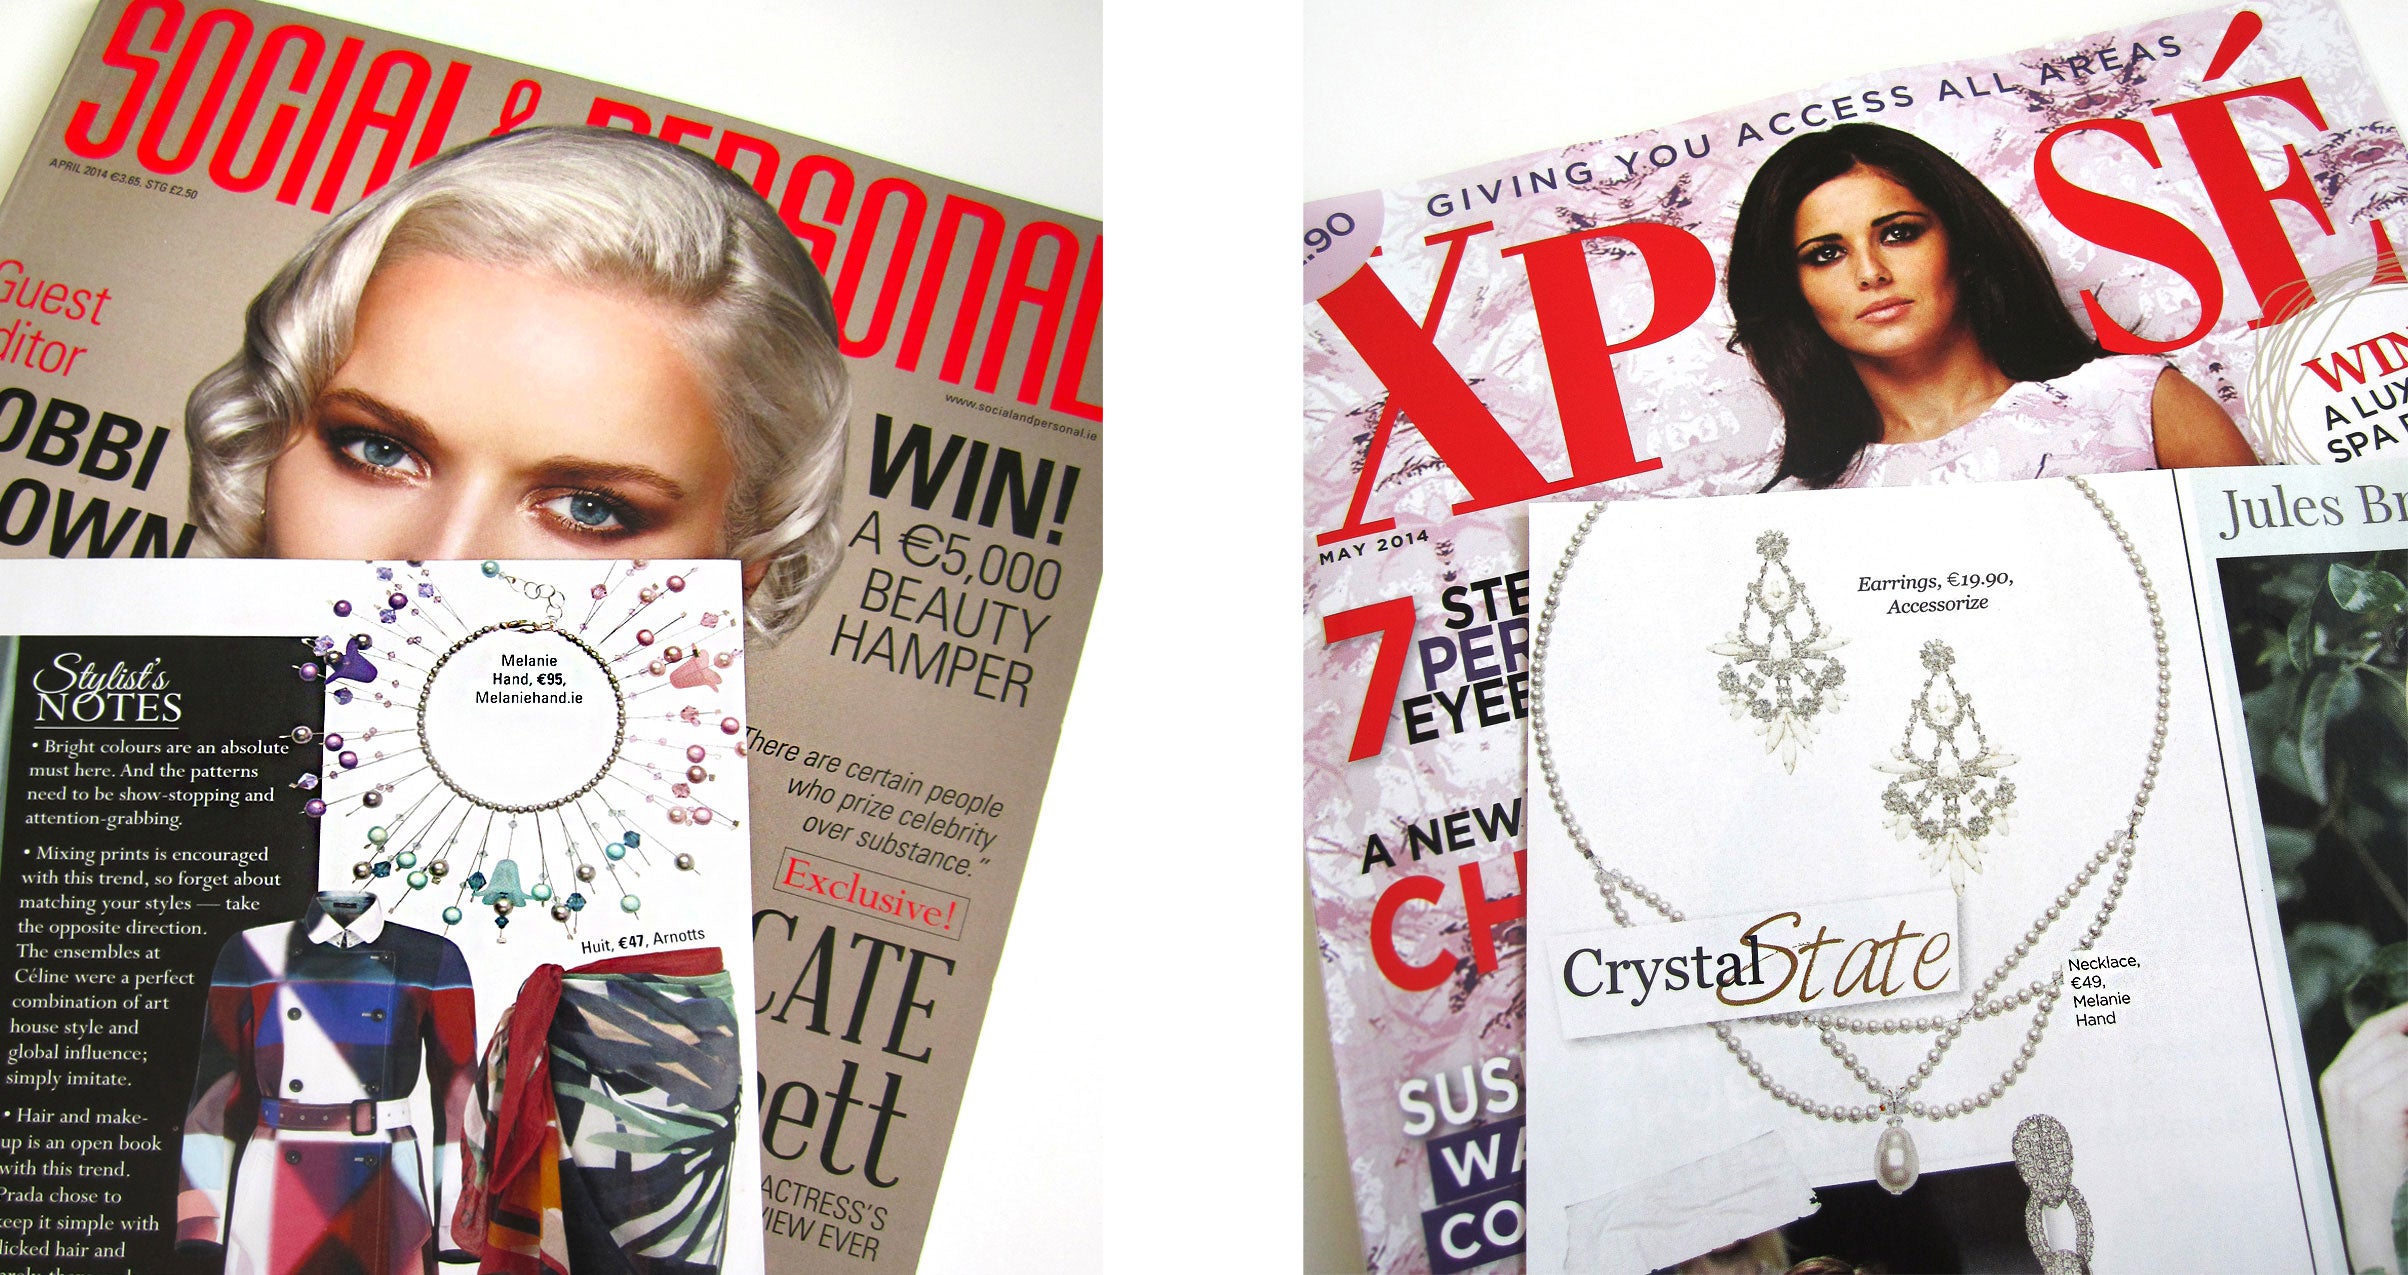 Melanie Hand Irish Designer Jewellery in Xpose and Social and Personal Magazine